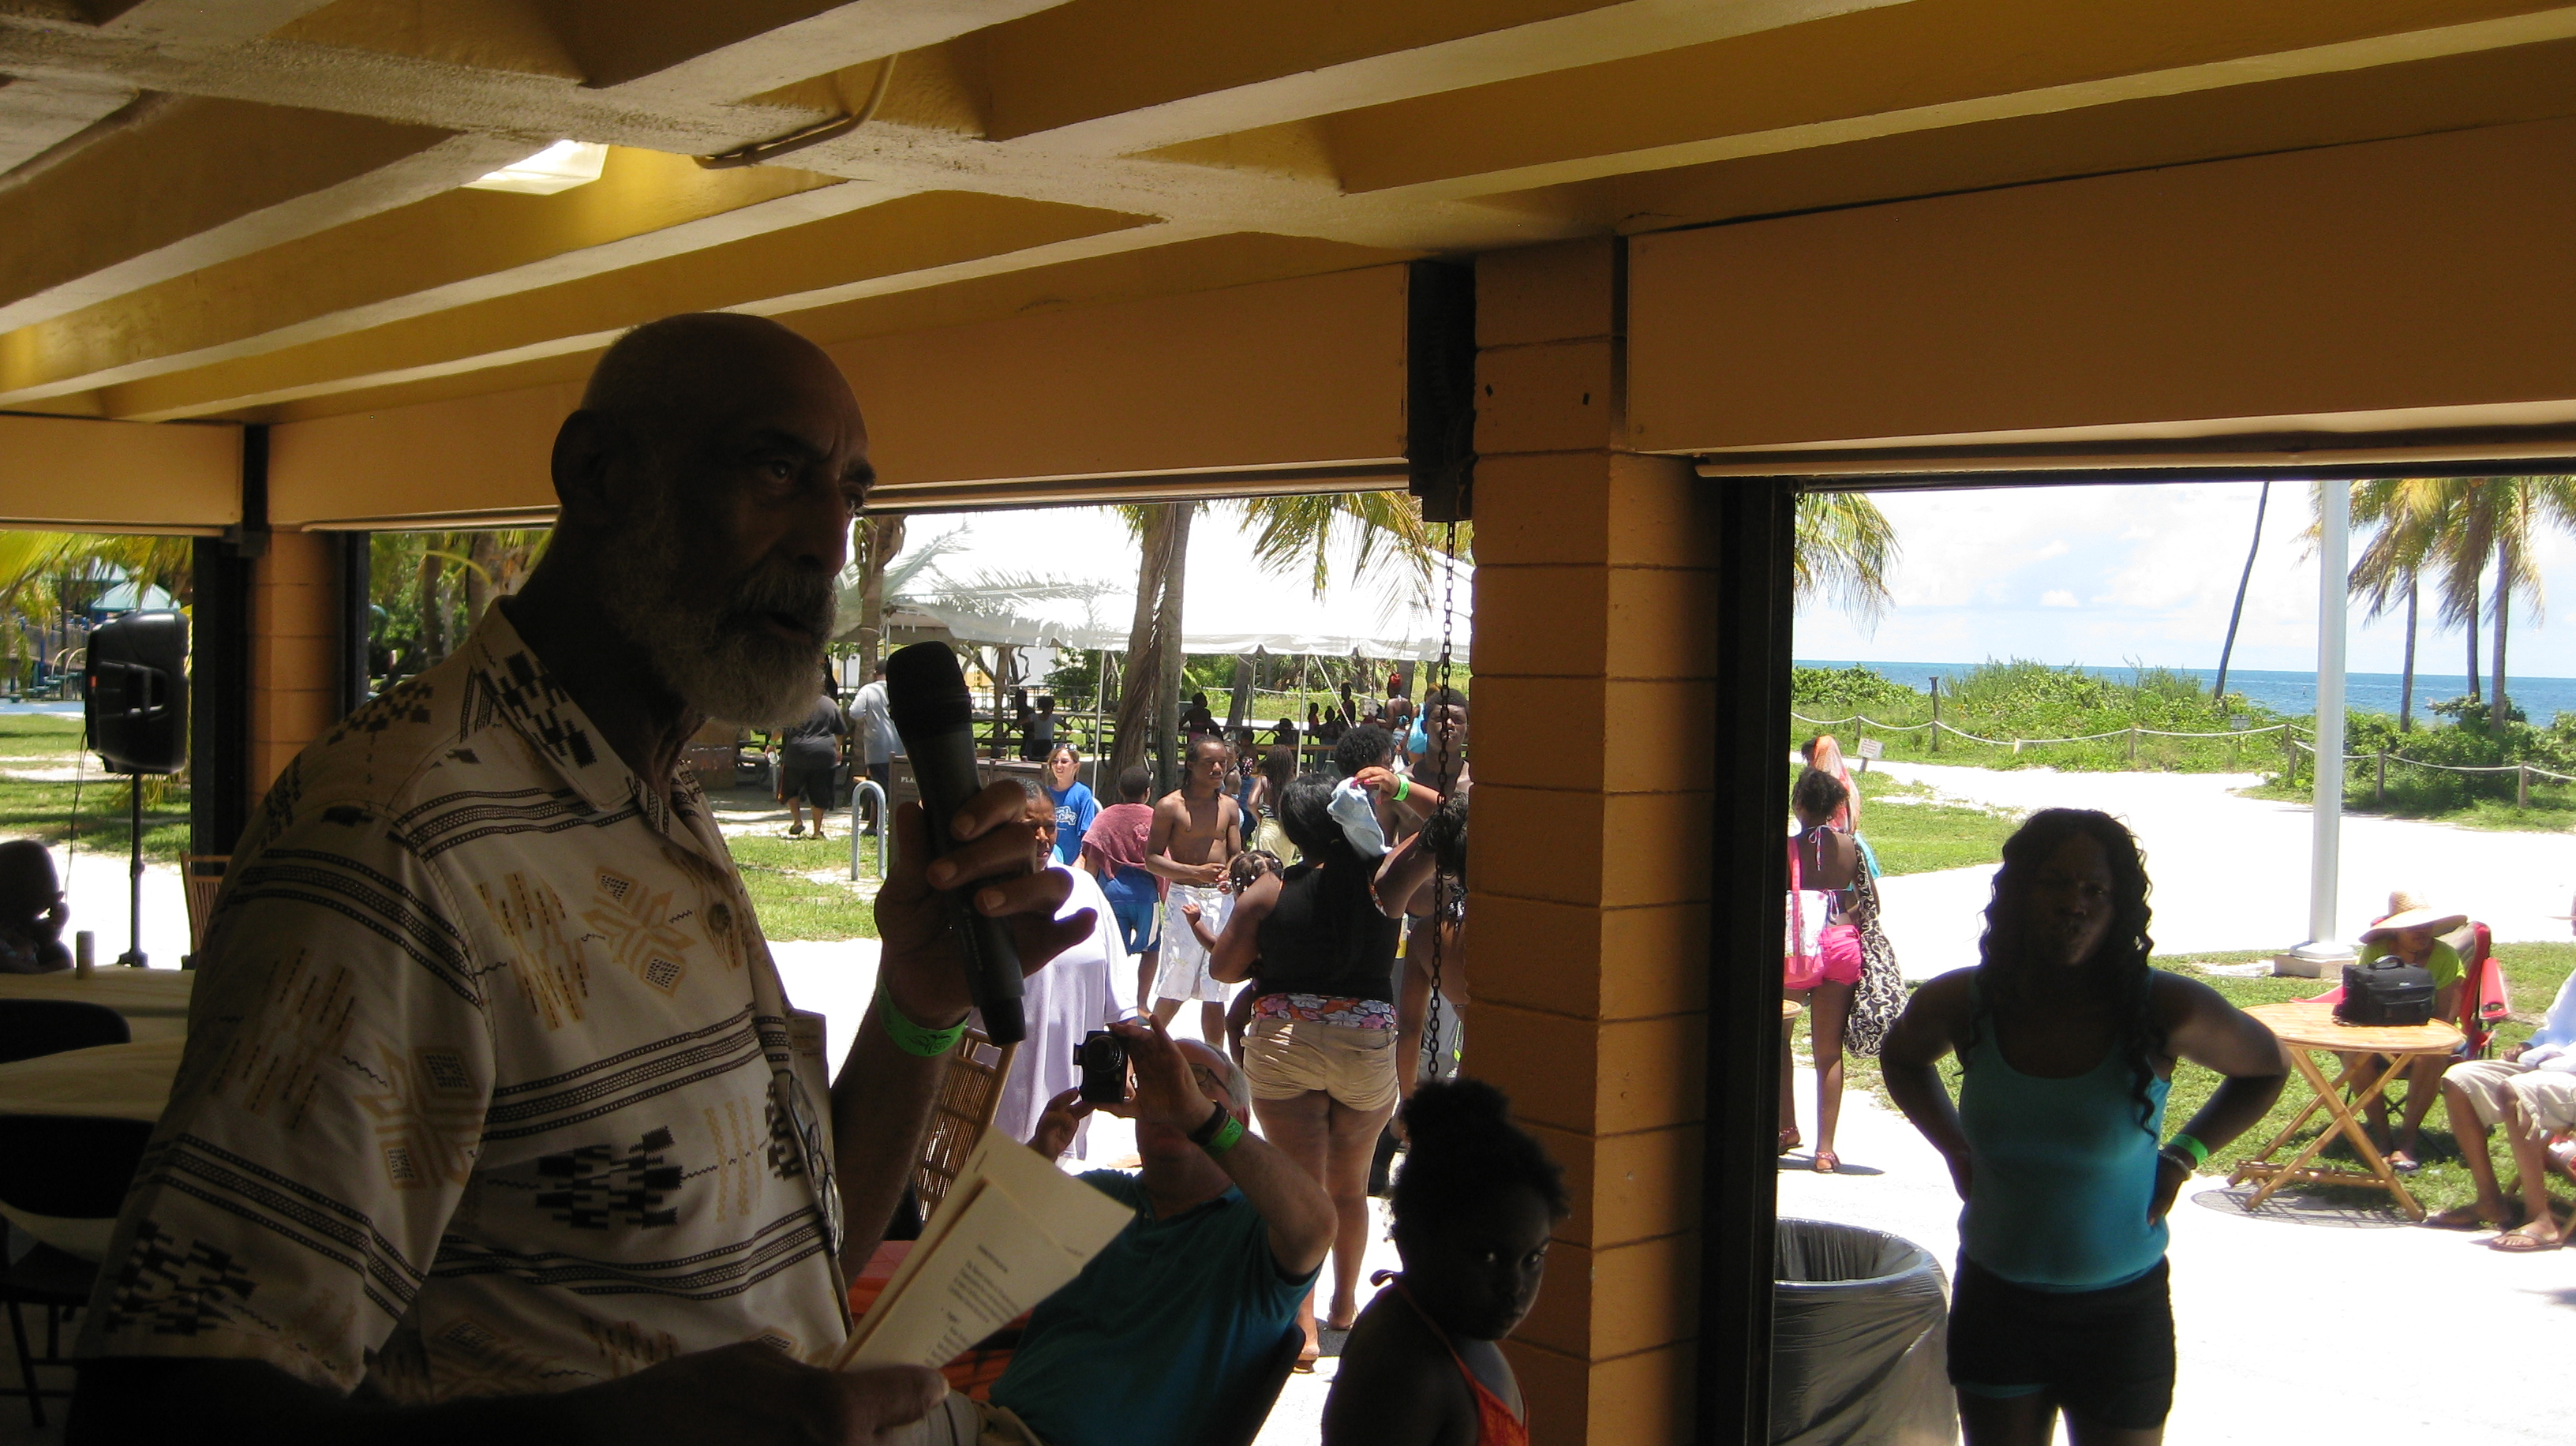 Historic Virginia Key Beach Park 69th Birthday Celebration - 